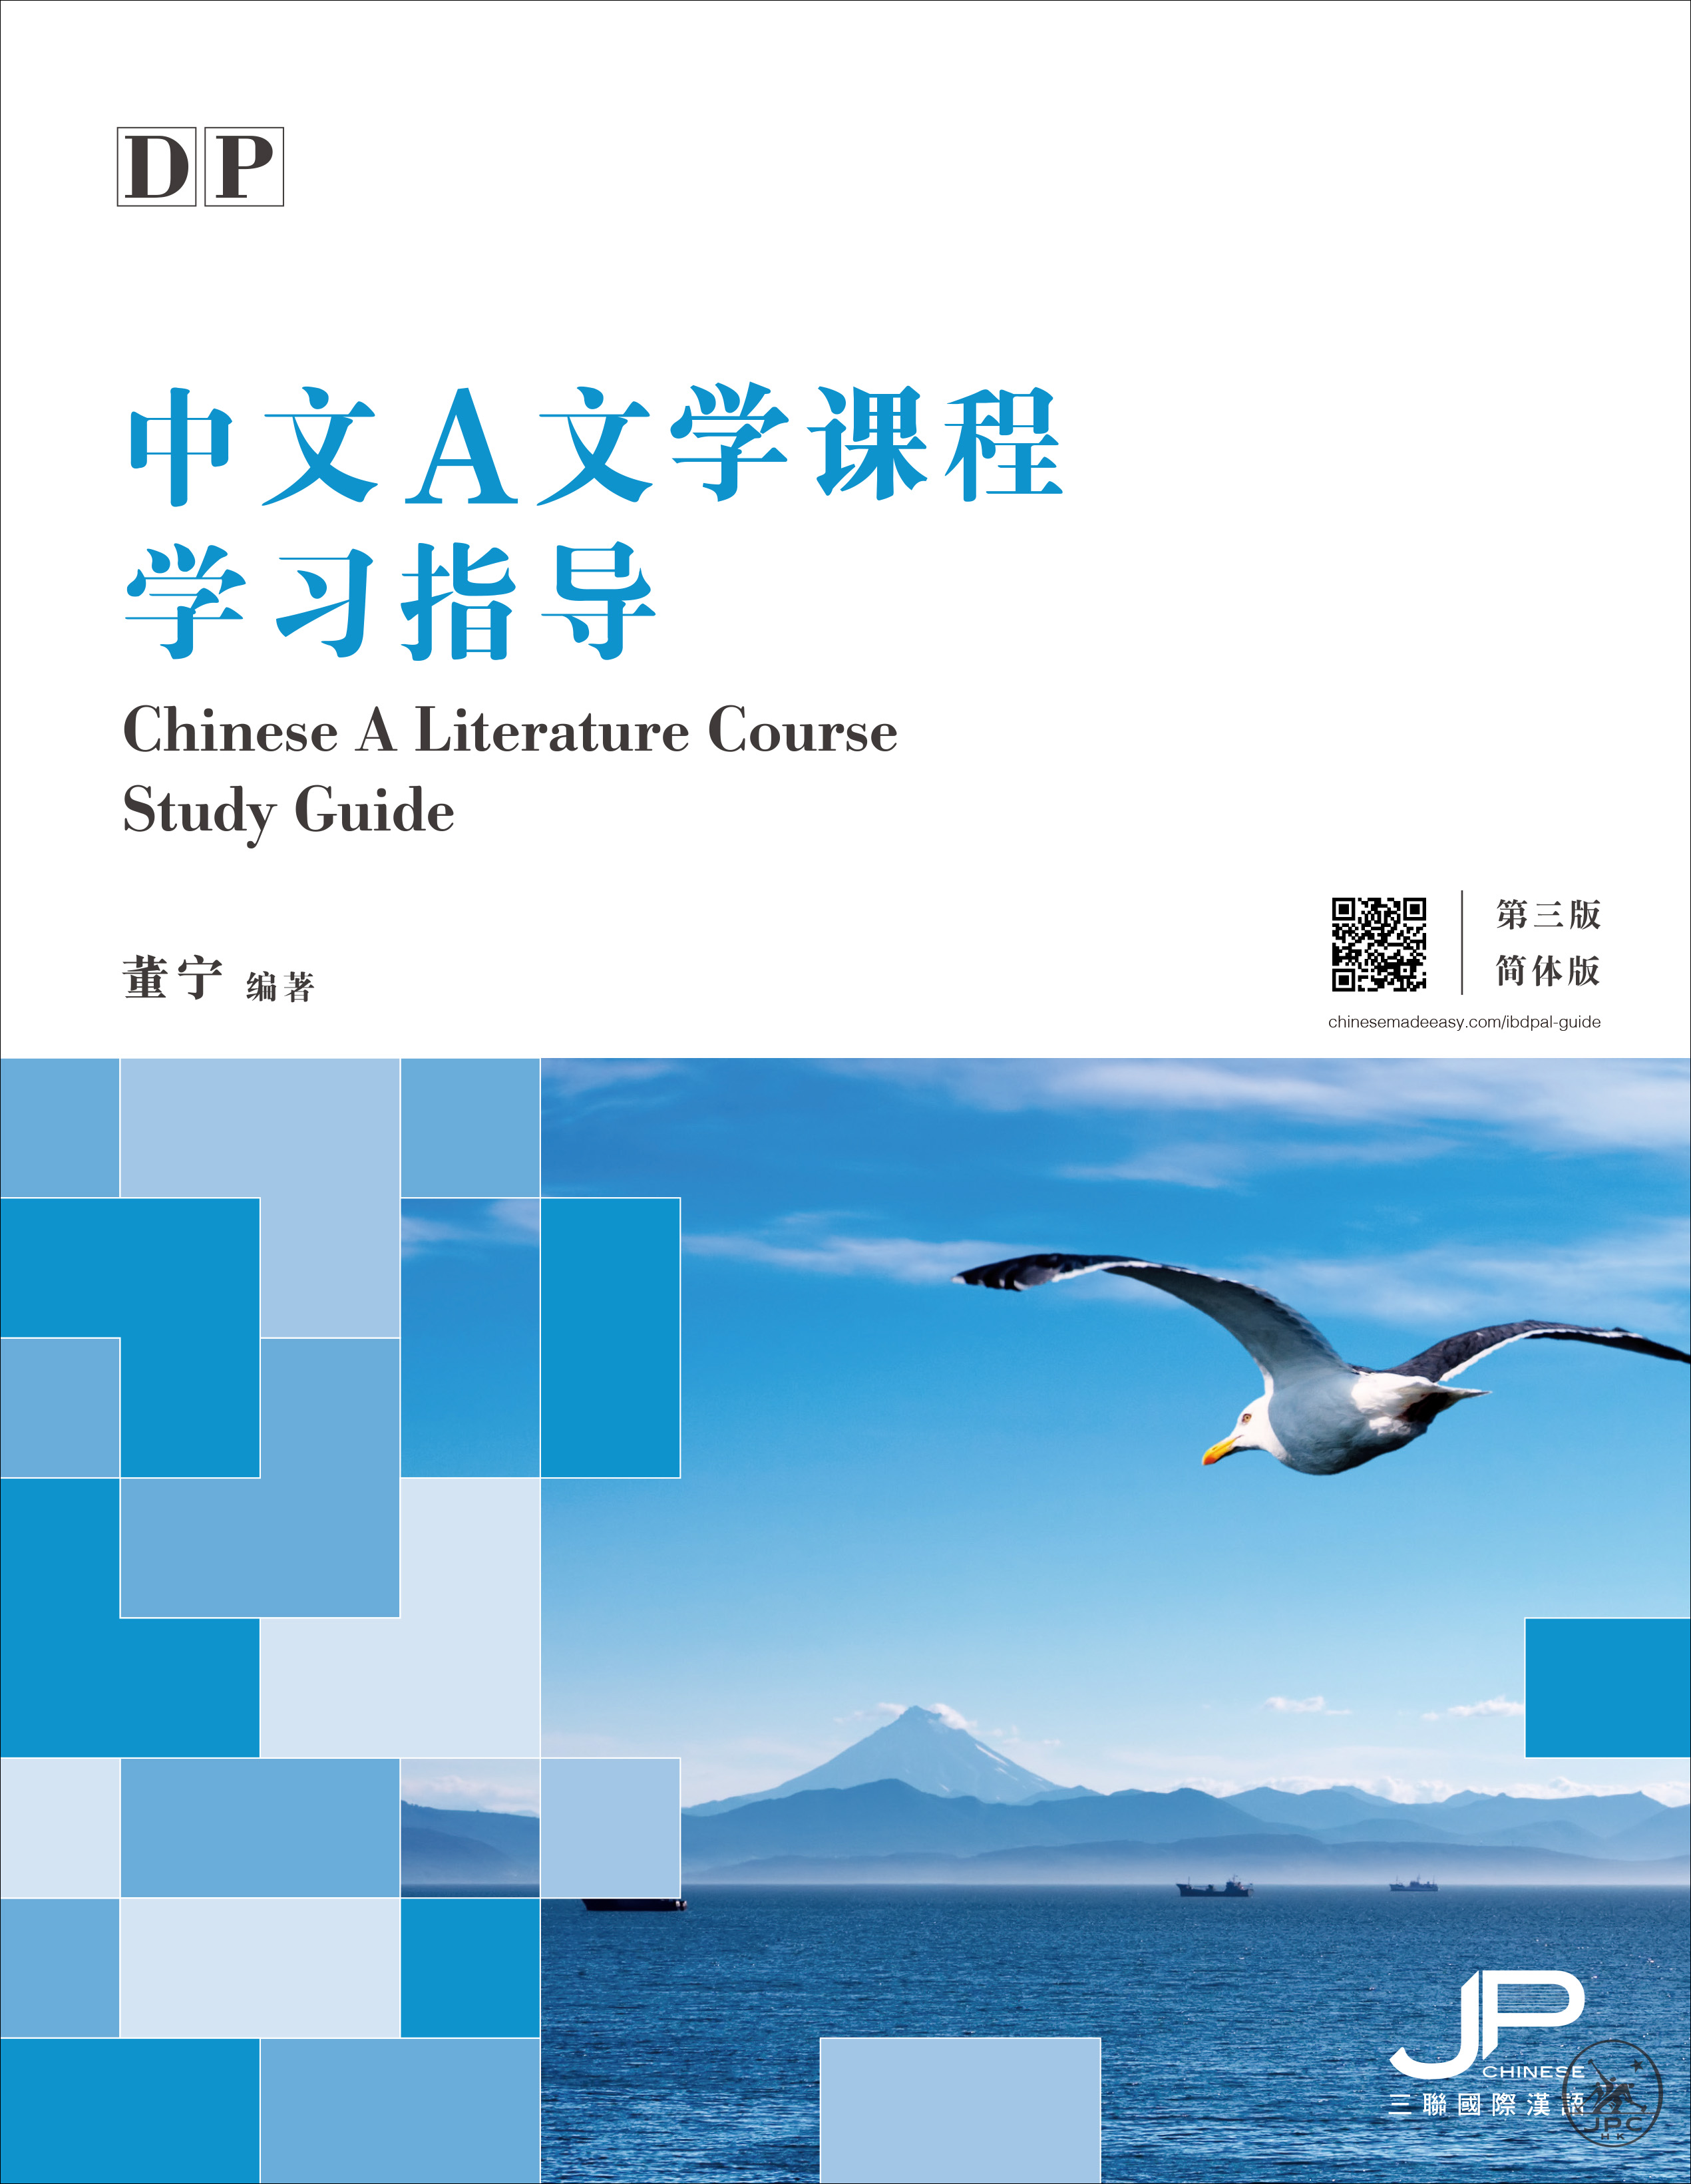 DP中文A文学课程指导 (第三版) (简体版)  DP Chinese A Literature Course Study Guide, 3rd Edition  